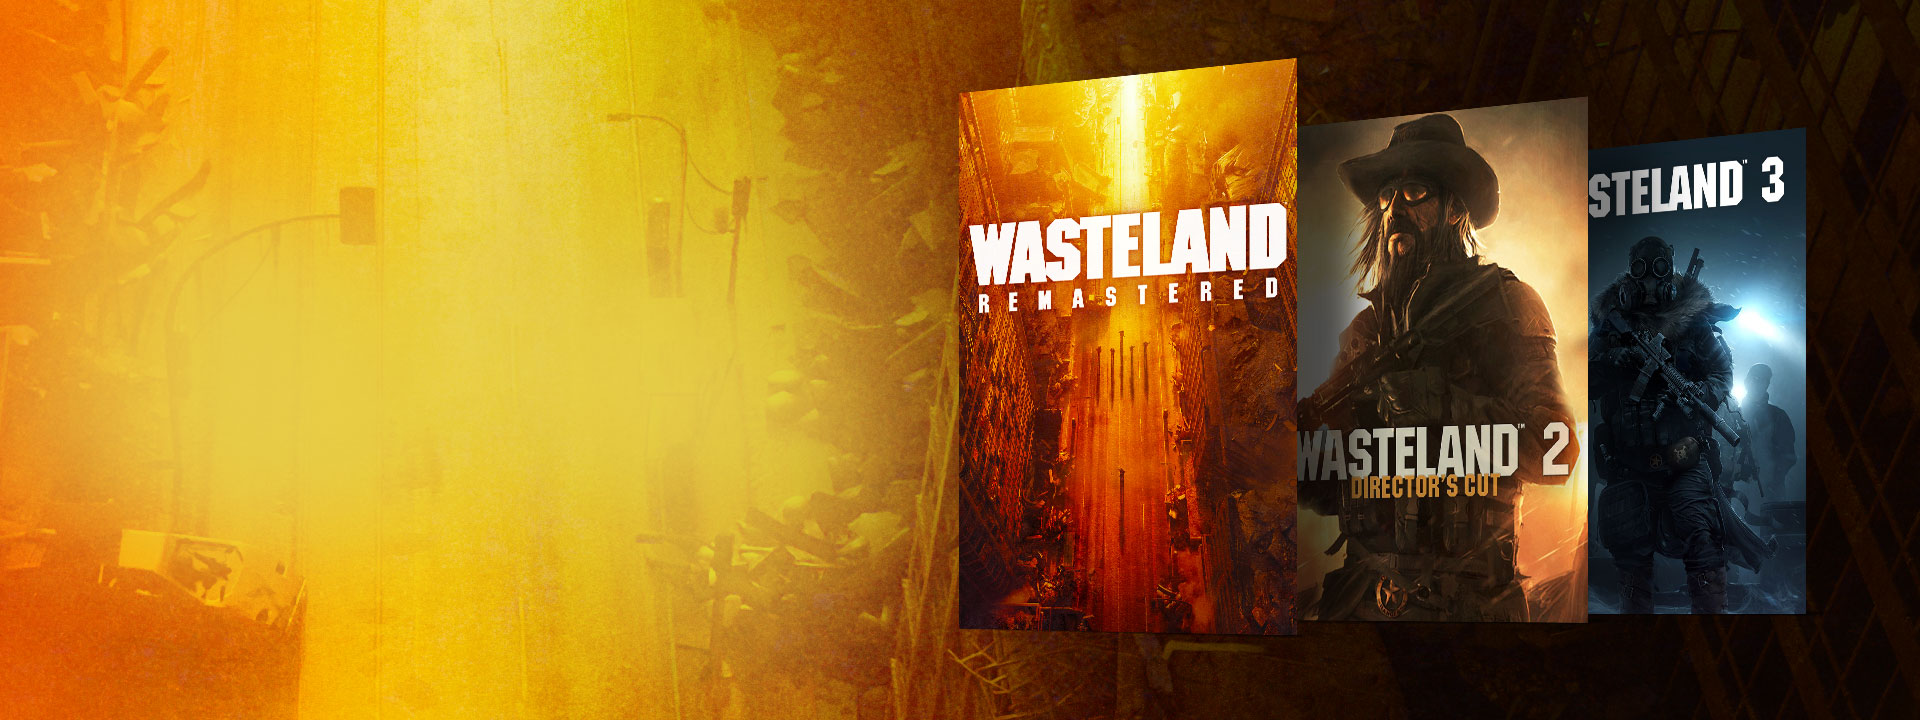 Wasteland Remastered、Wasteland 2 導演剪輯版和 Wasteland 3 的包裝圖。黃色和橙色色調的廢棄街道背景